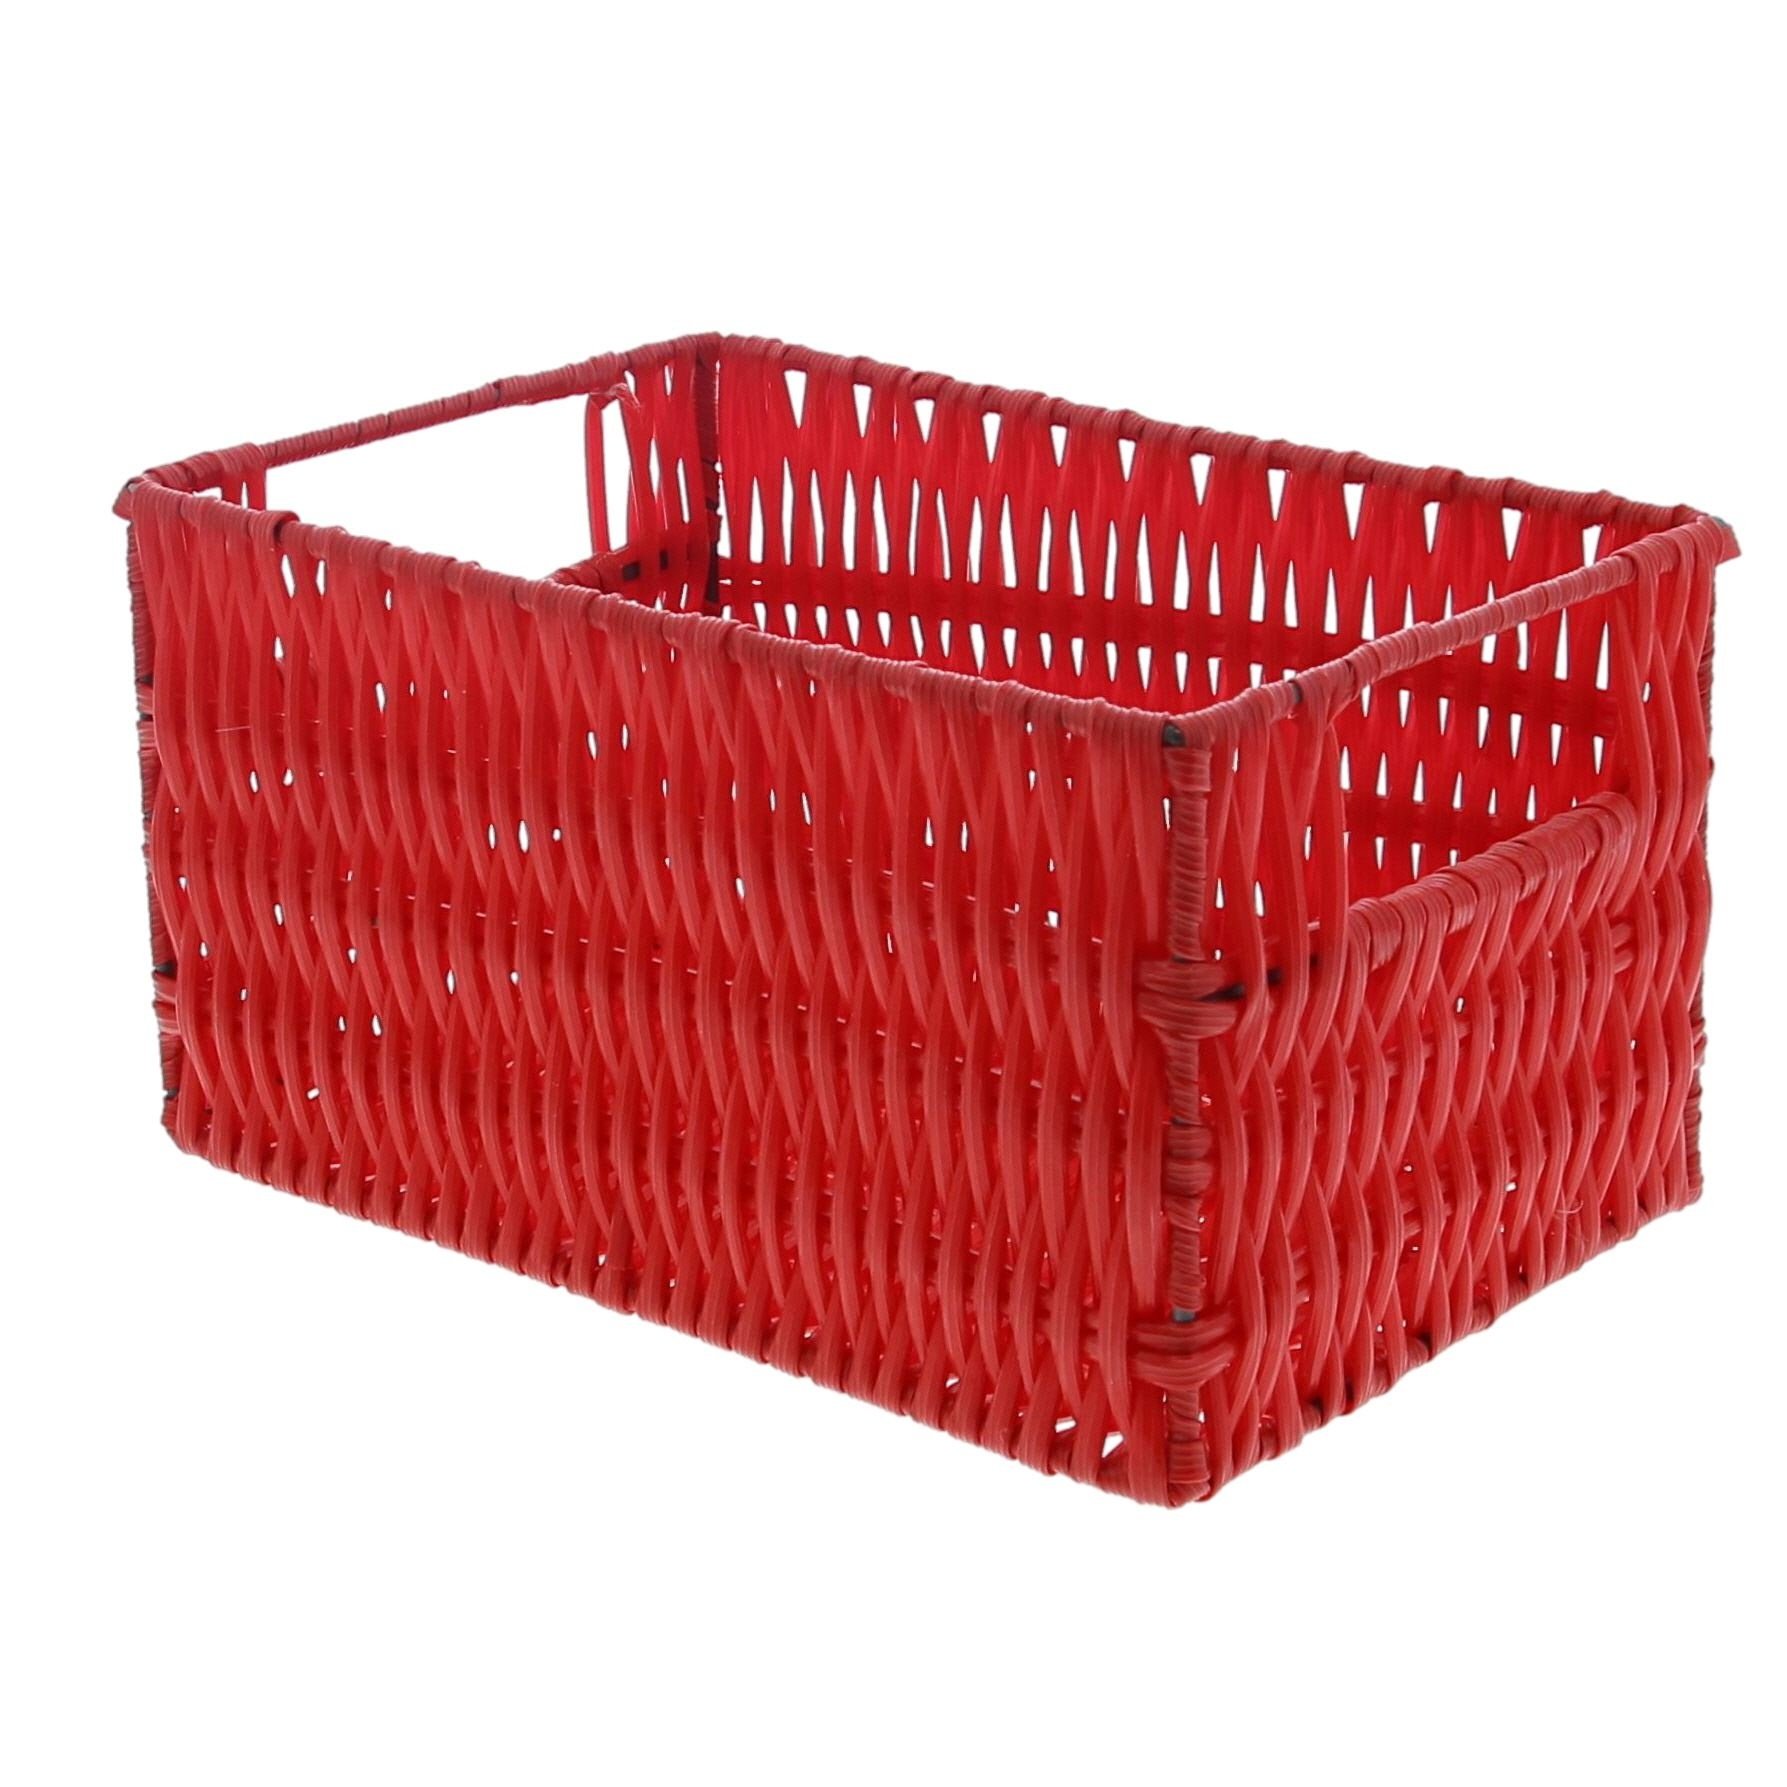 Plastic basket rectangular - red  - 5 pieces